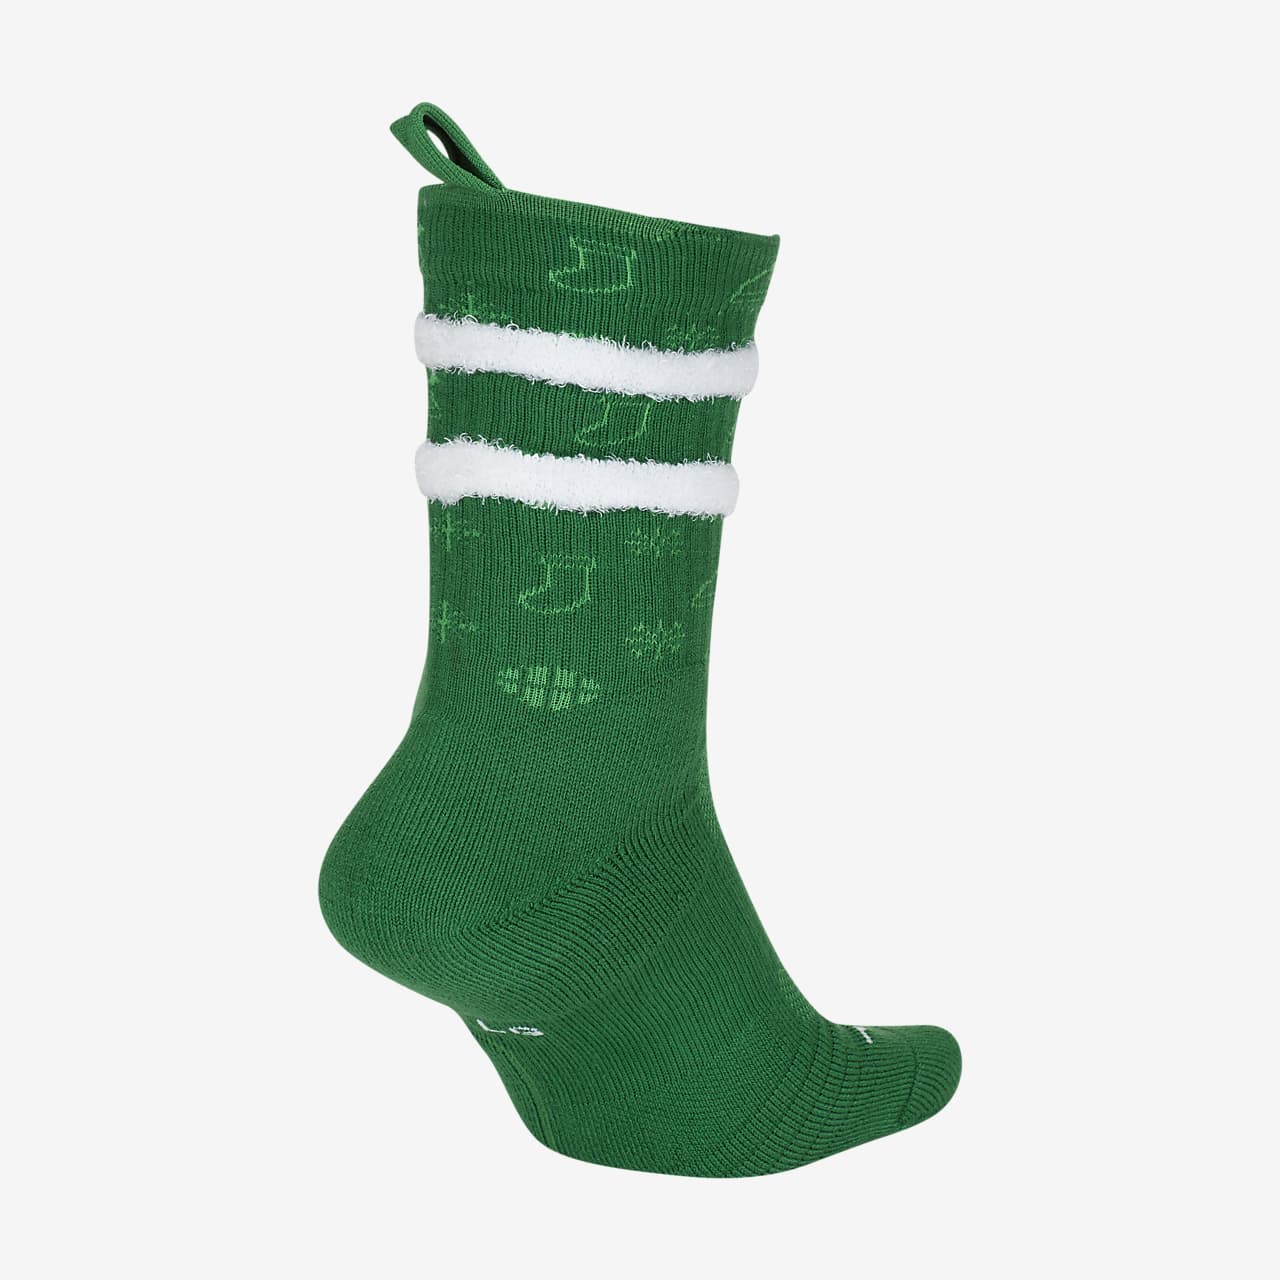 green and white basketball socks